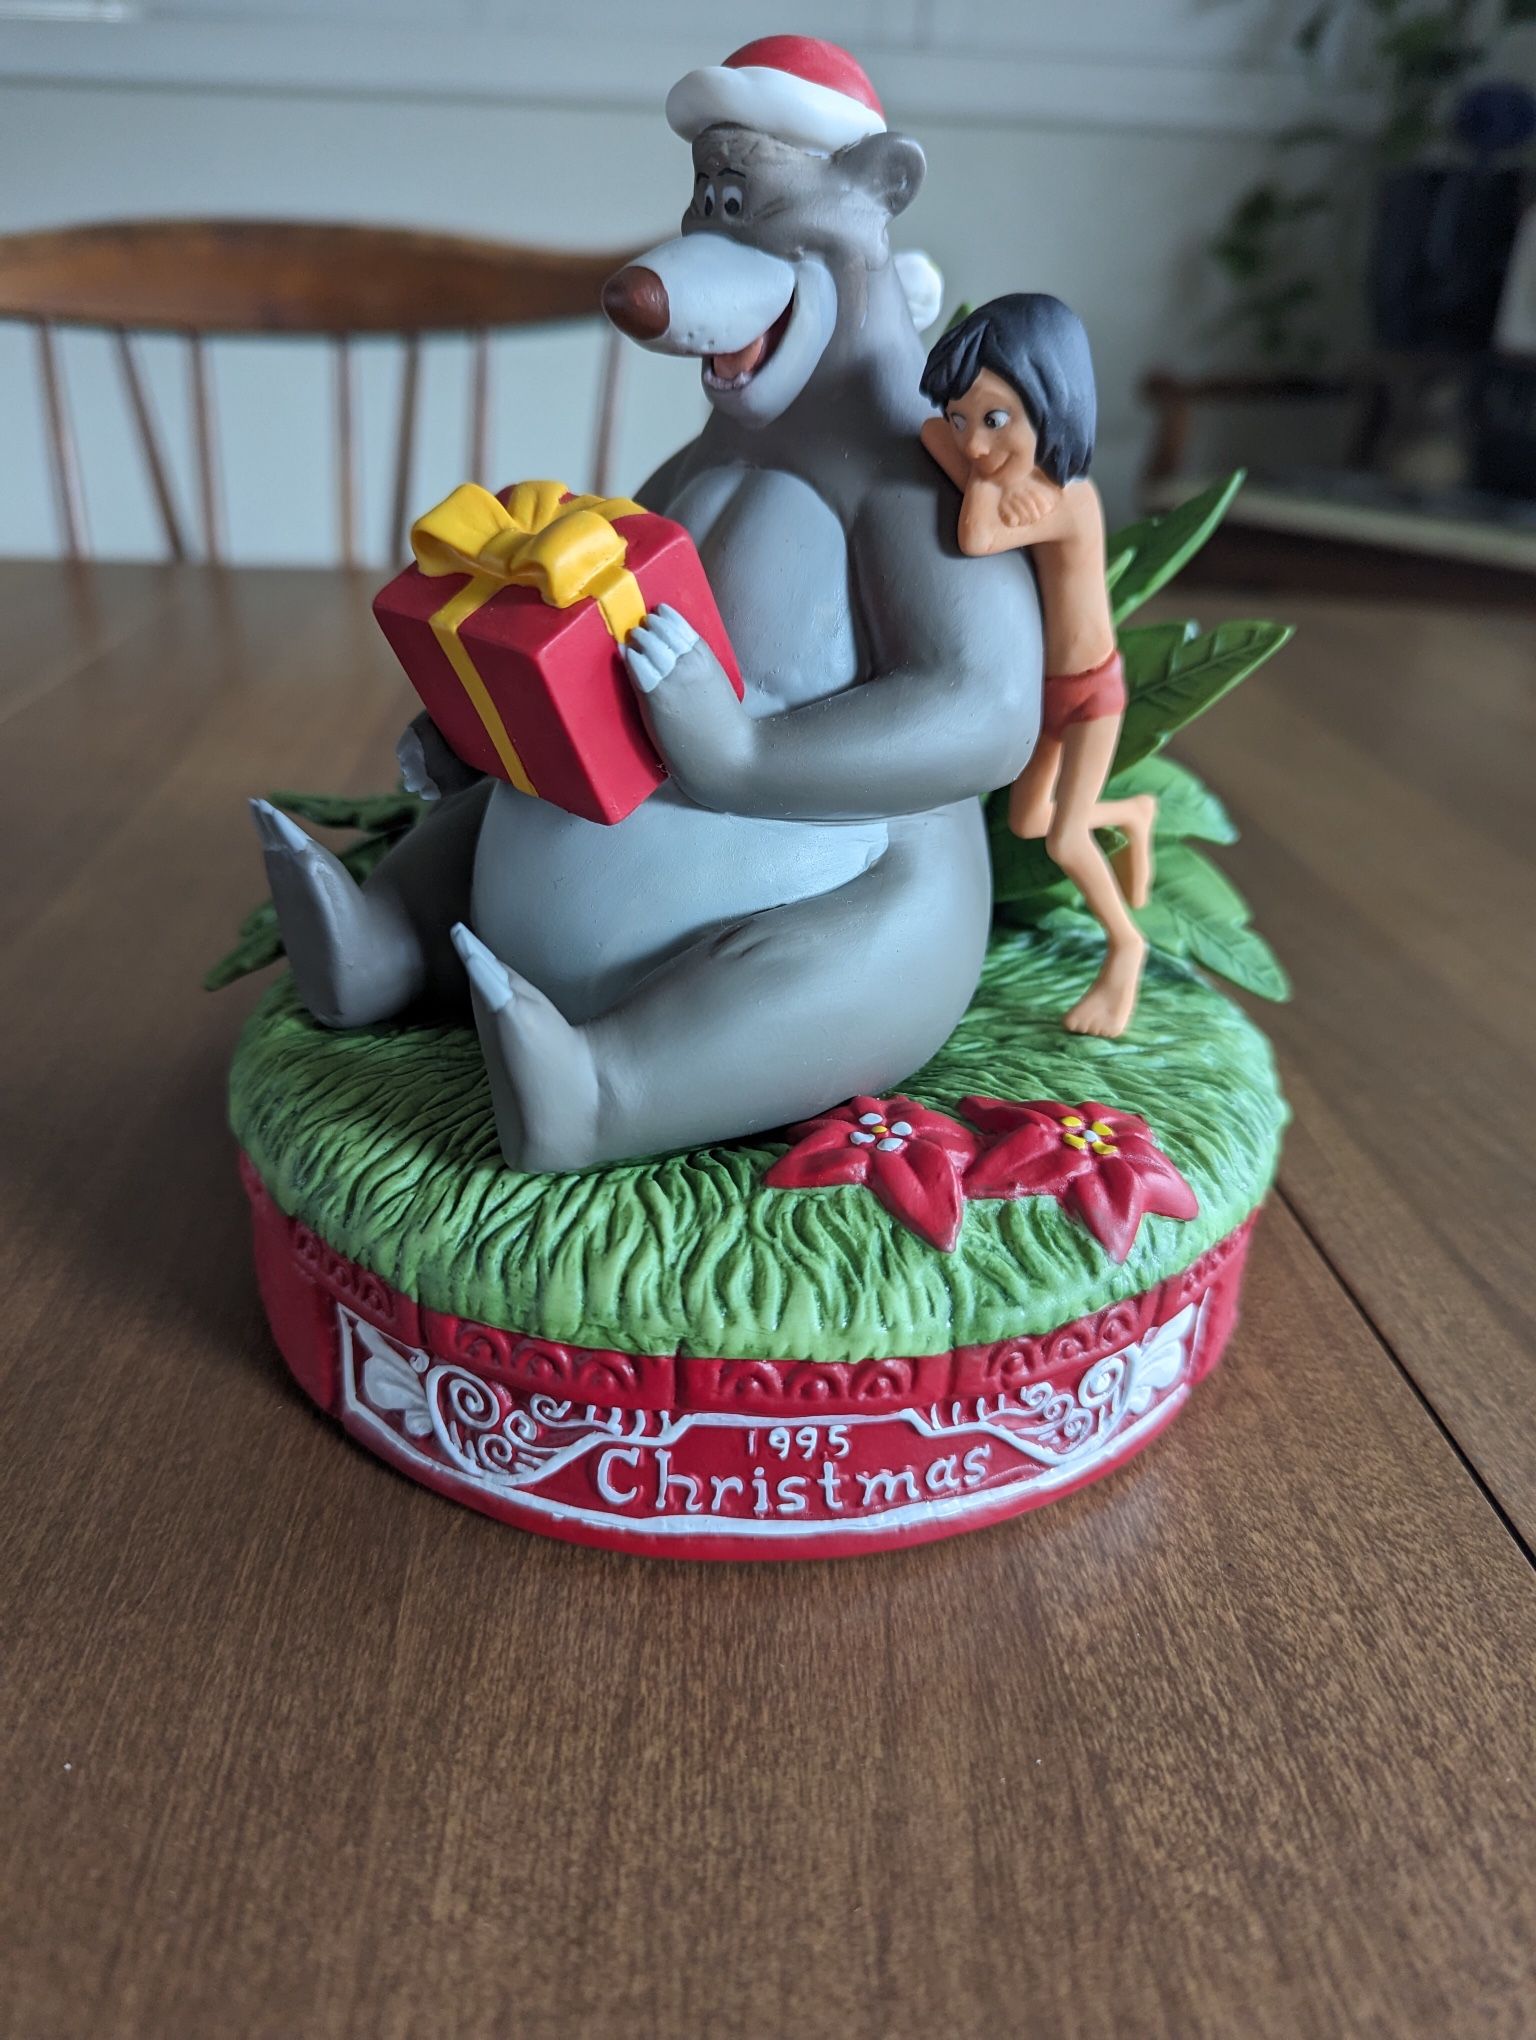 Disney Limited Edition For You, Baloo 1995 Figurine